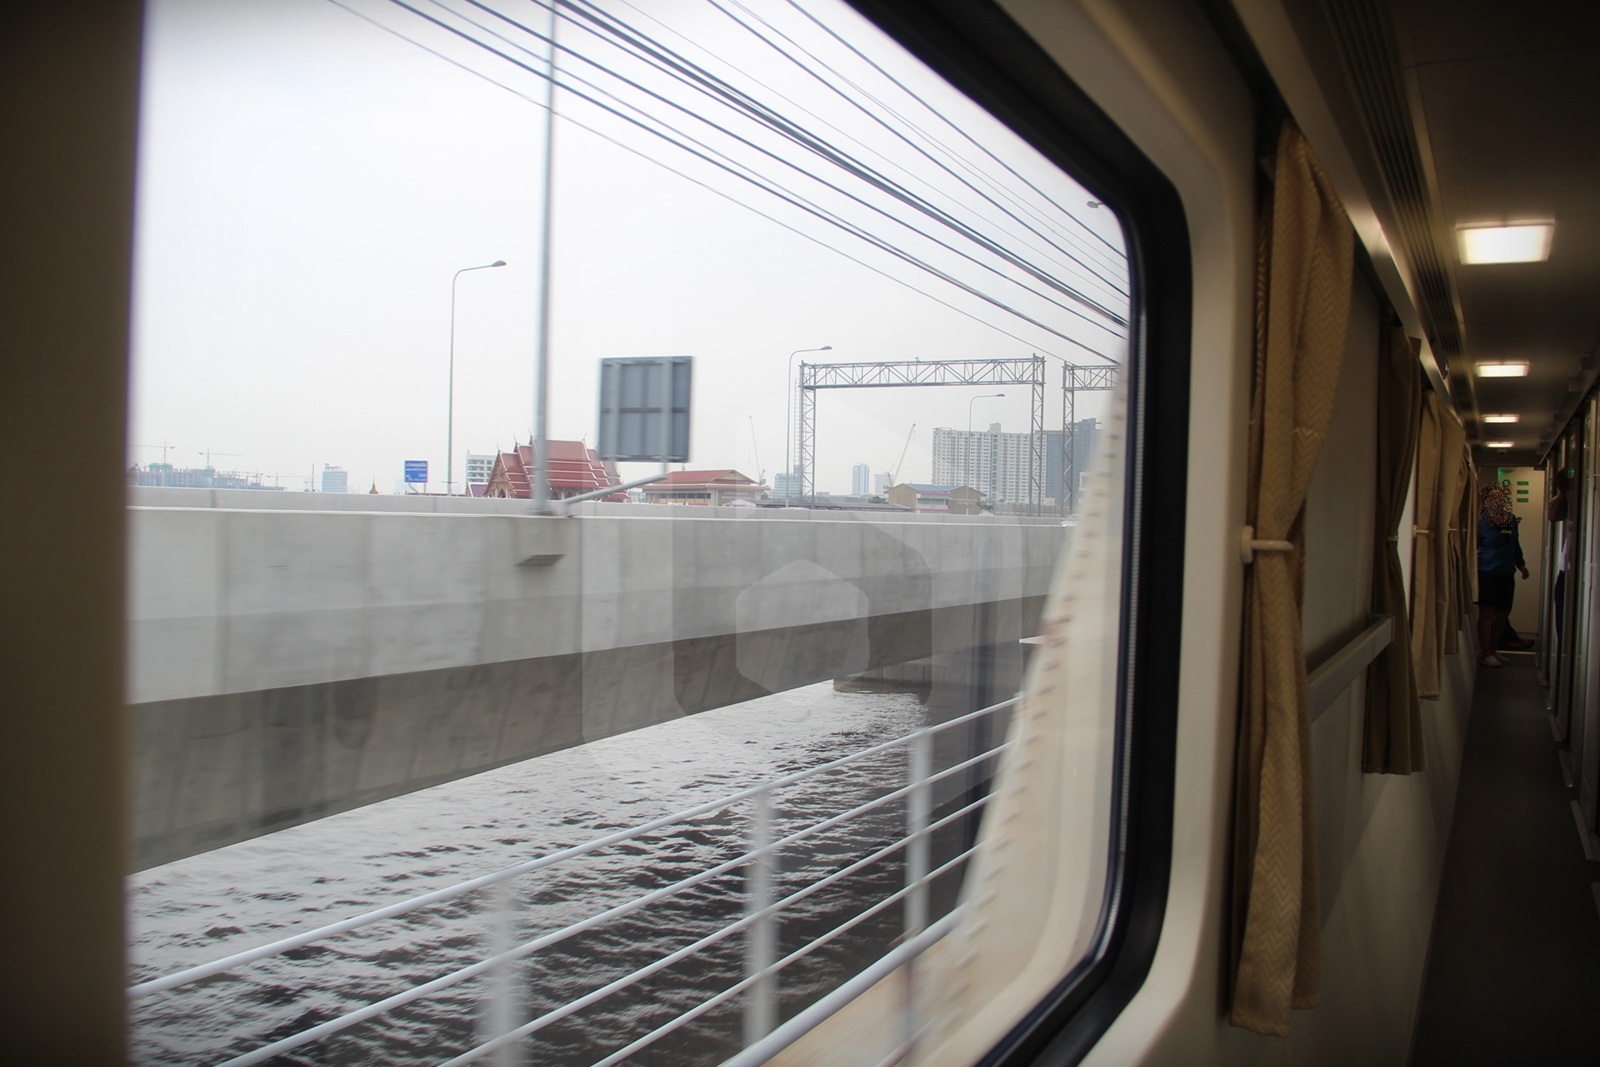 Bangkok to Hat Yai by train